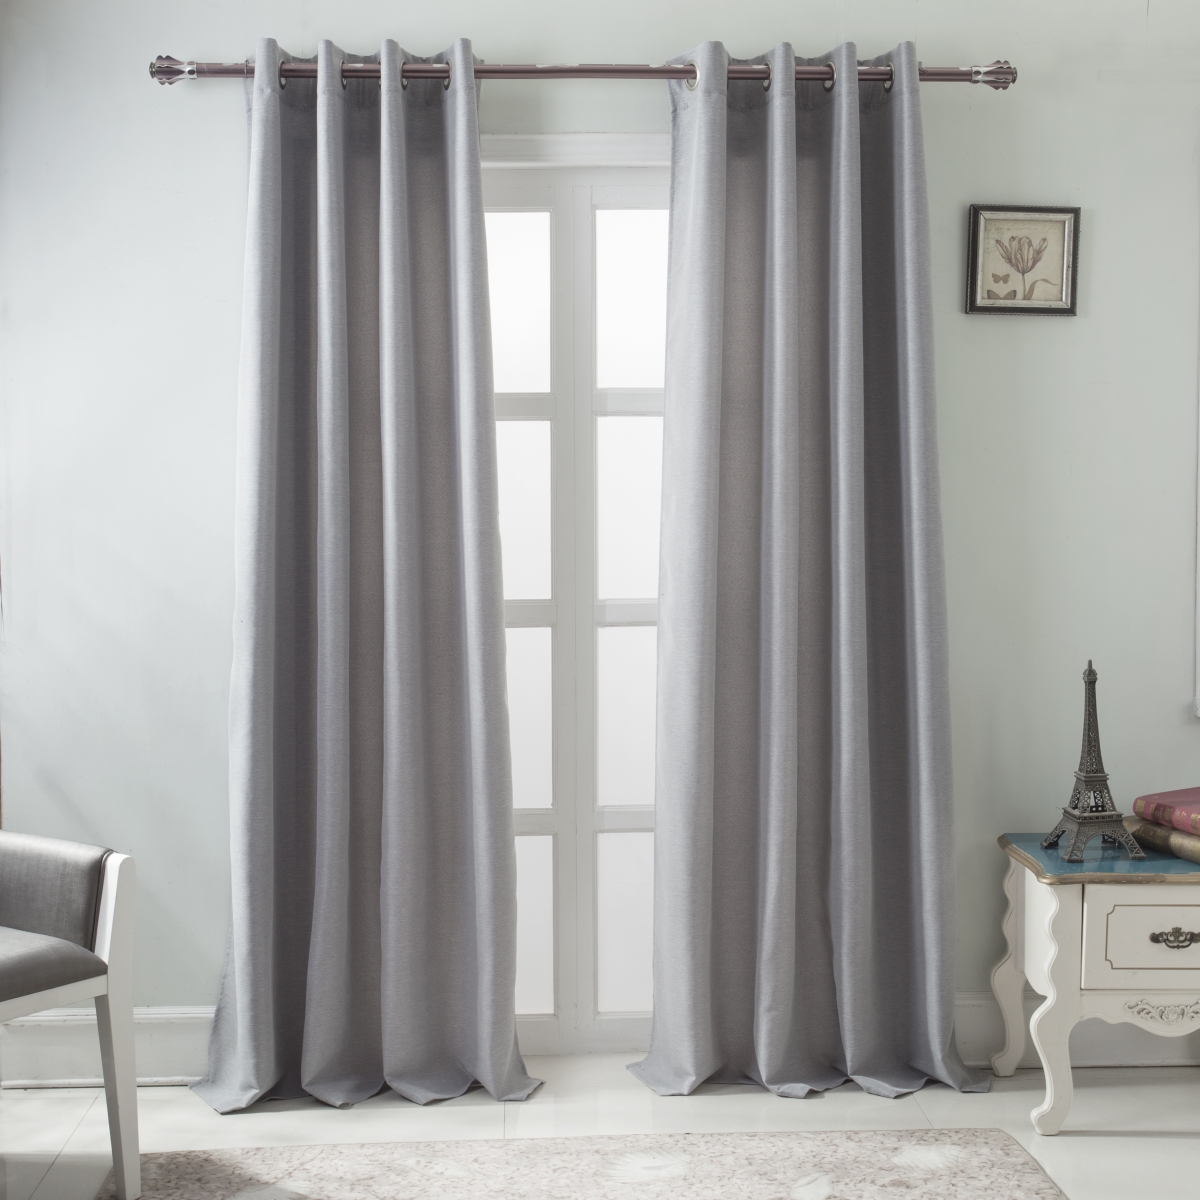 Pnb17234 54 X 84 In. Burma Room Darkening Grommet Single Curtain Panel, Grey